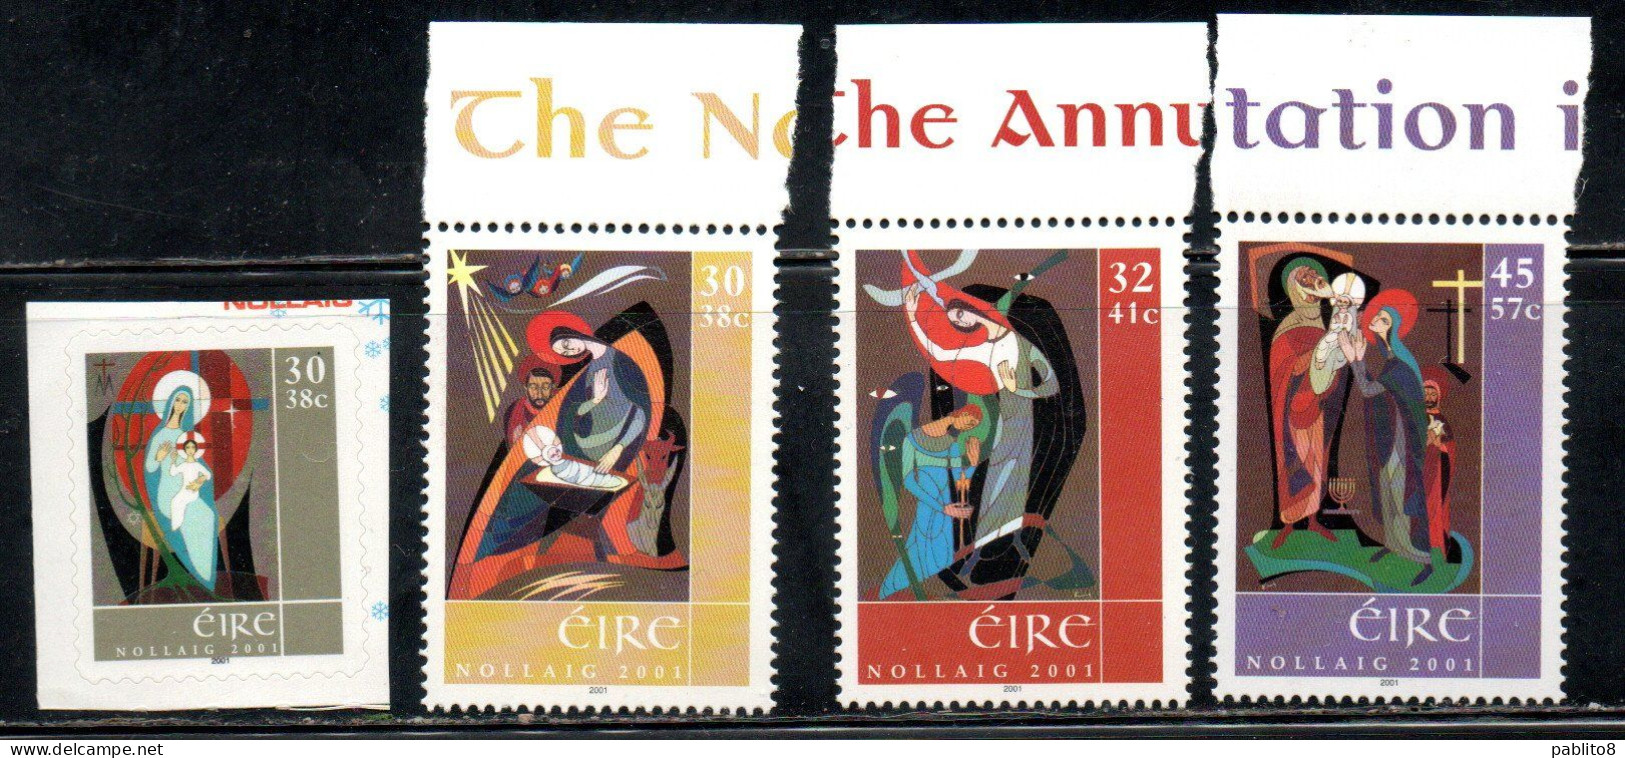 EIRE IRELAND IRLANDA 2001 CHRISTMAS ANNUNCIATION NOLLAIG NATALE NOEL WEIHNACHTEN NAVIDAD COMPLETE SET SERIE COMPLETA MNH - Unused Stamps